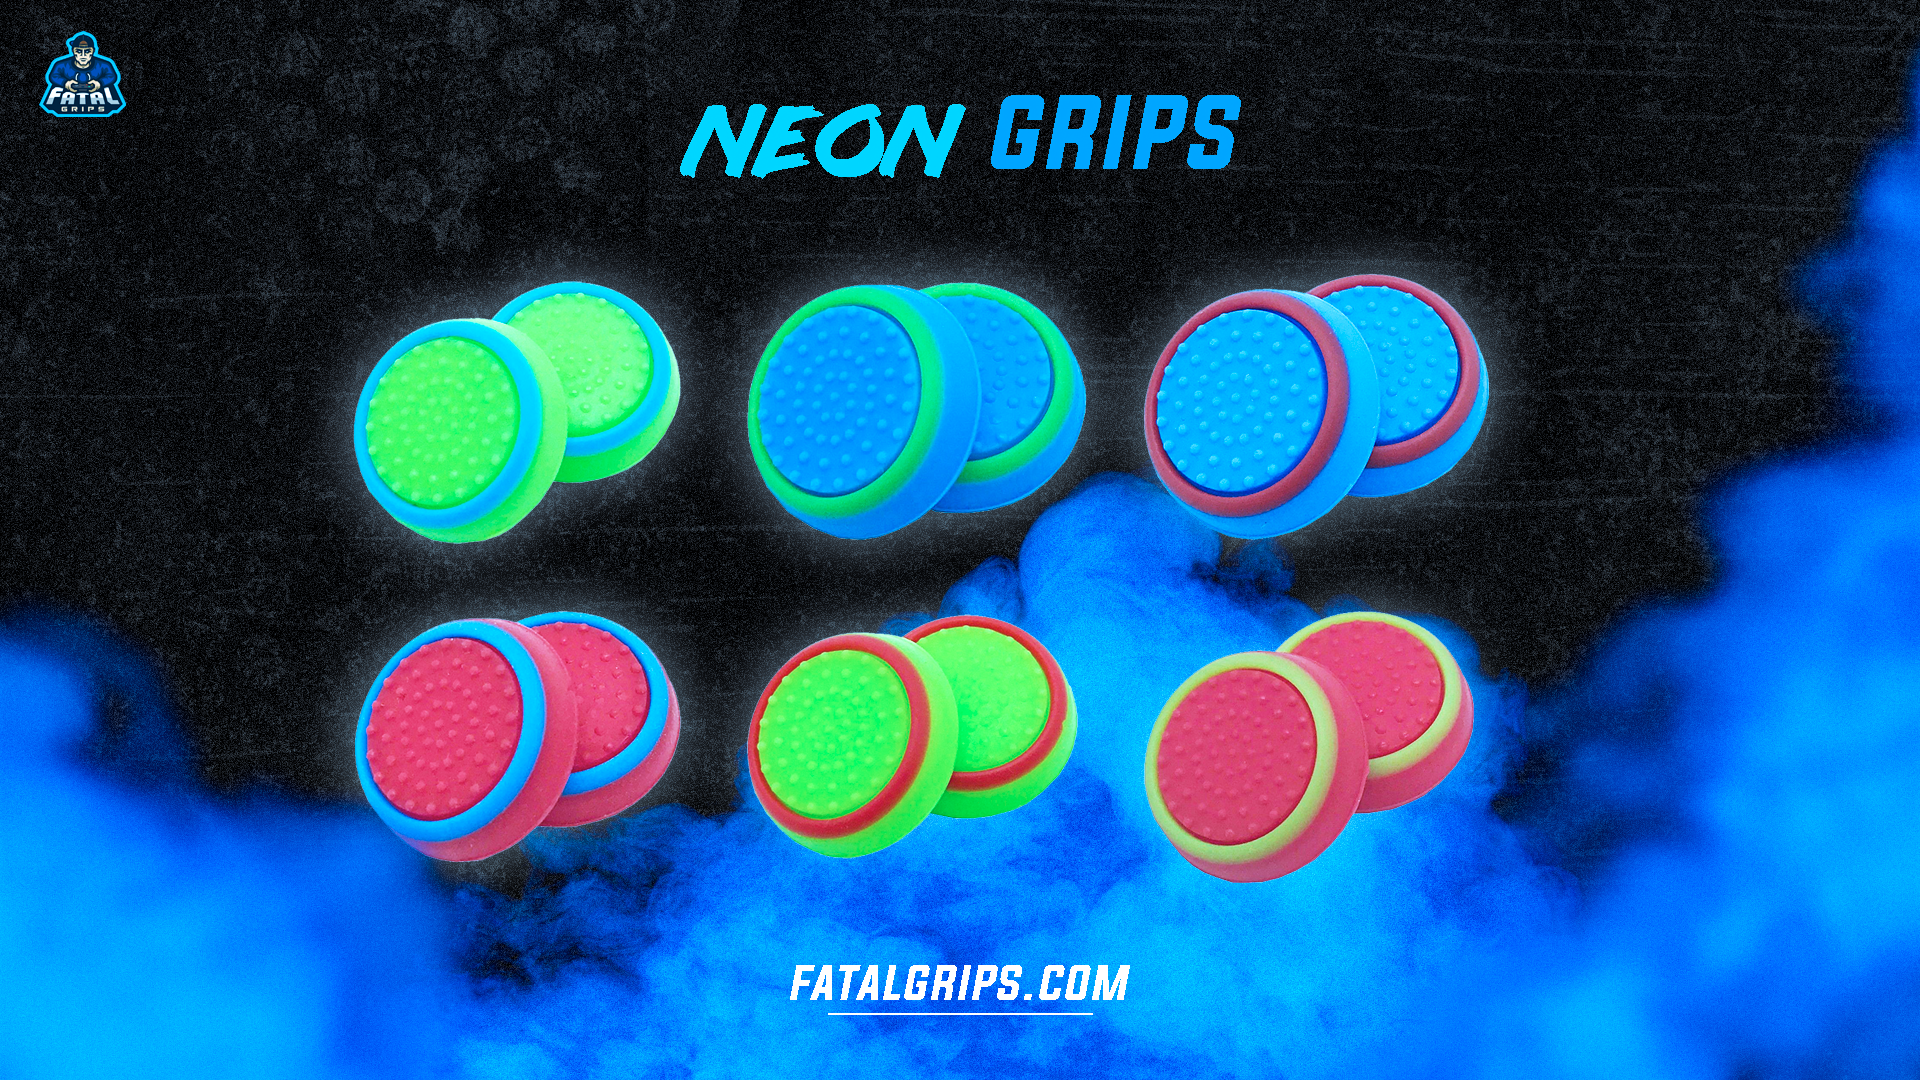 Neon Grips - Fatal Grips